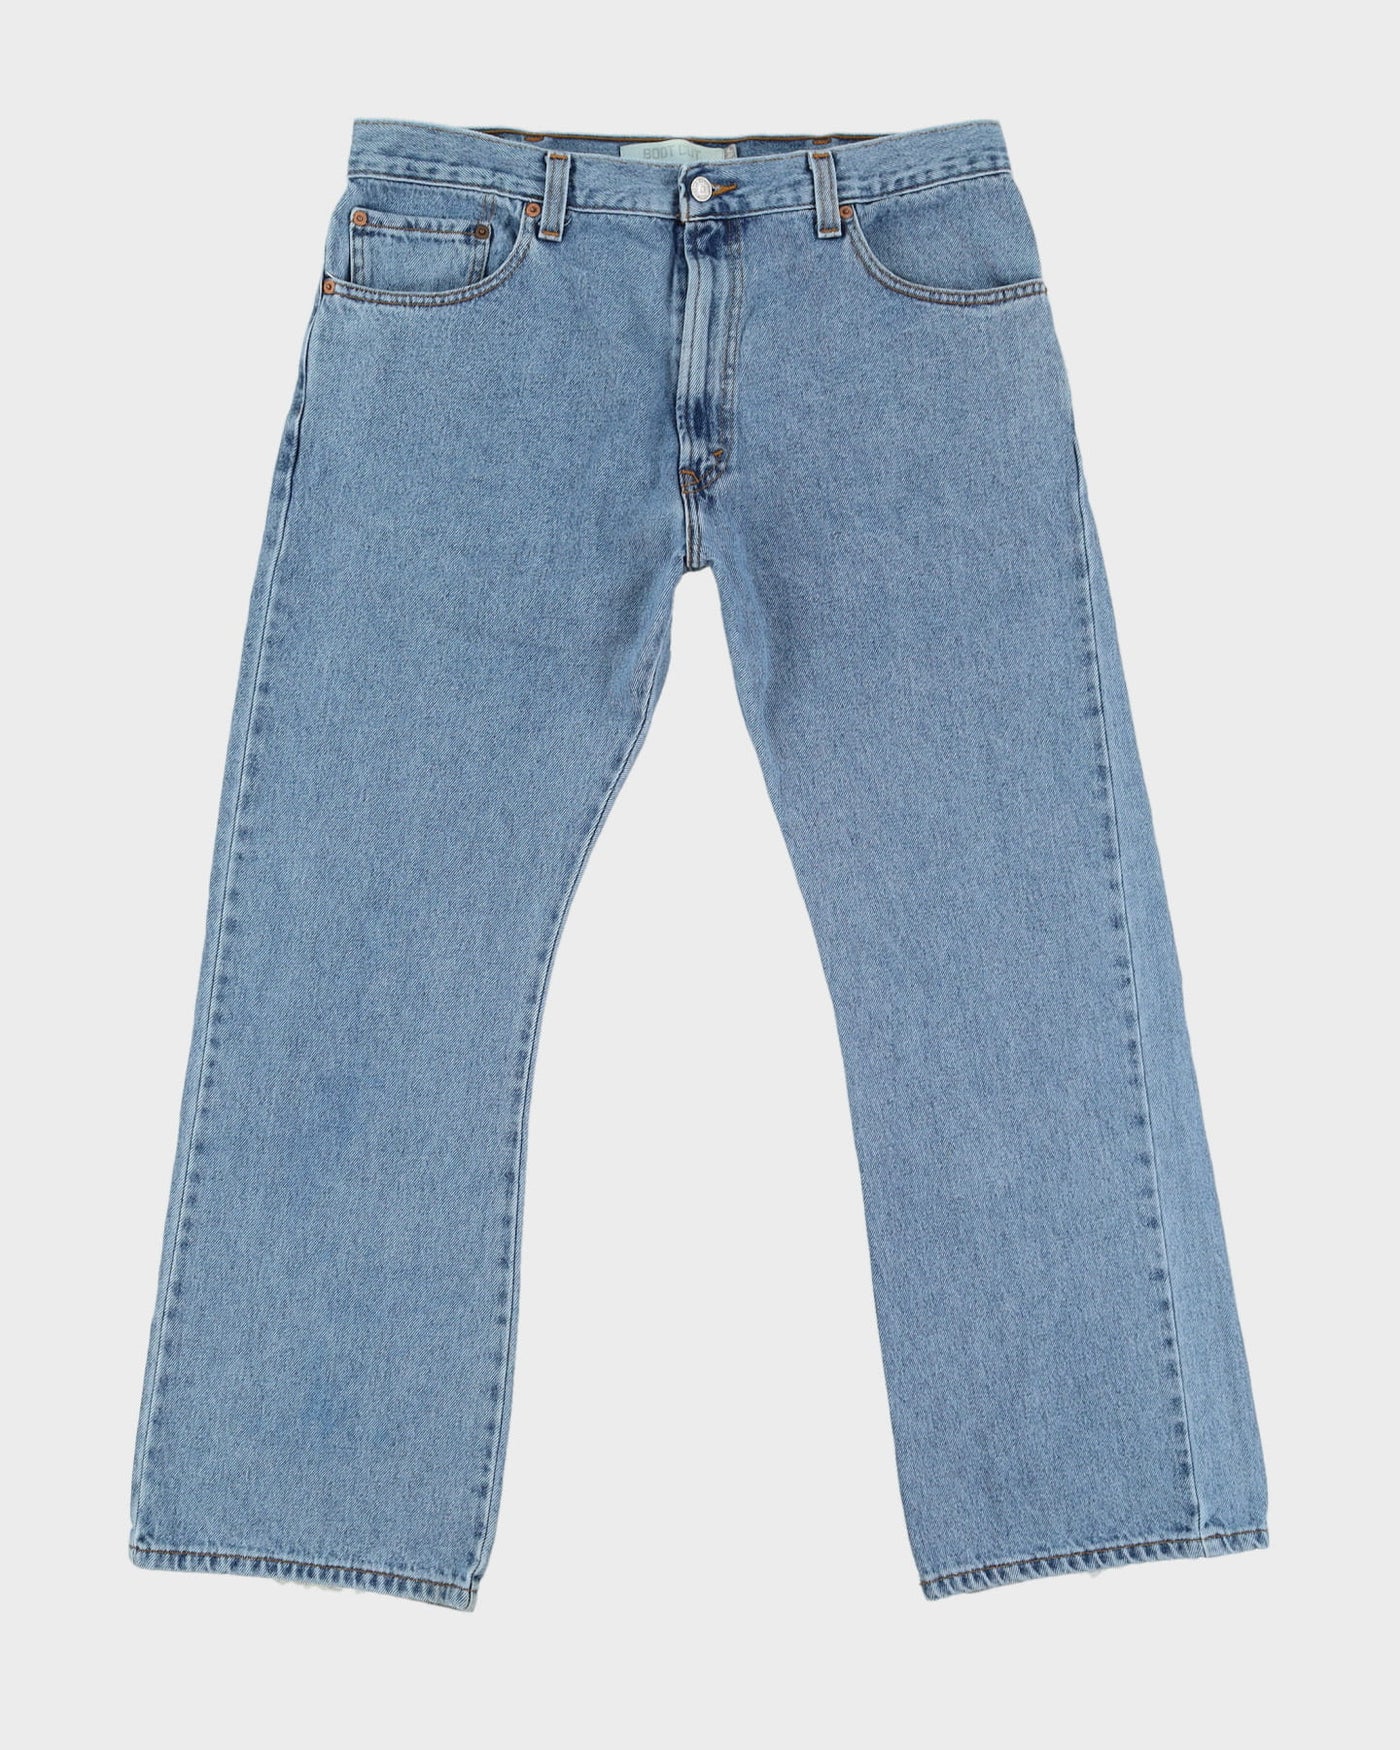 00s Levi's 517 Blue Medium Wash Bootcut Jeans - W38 L30